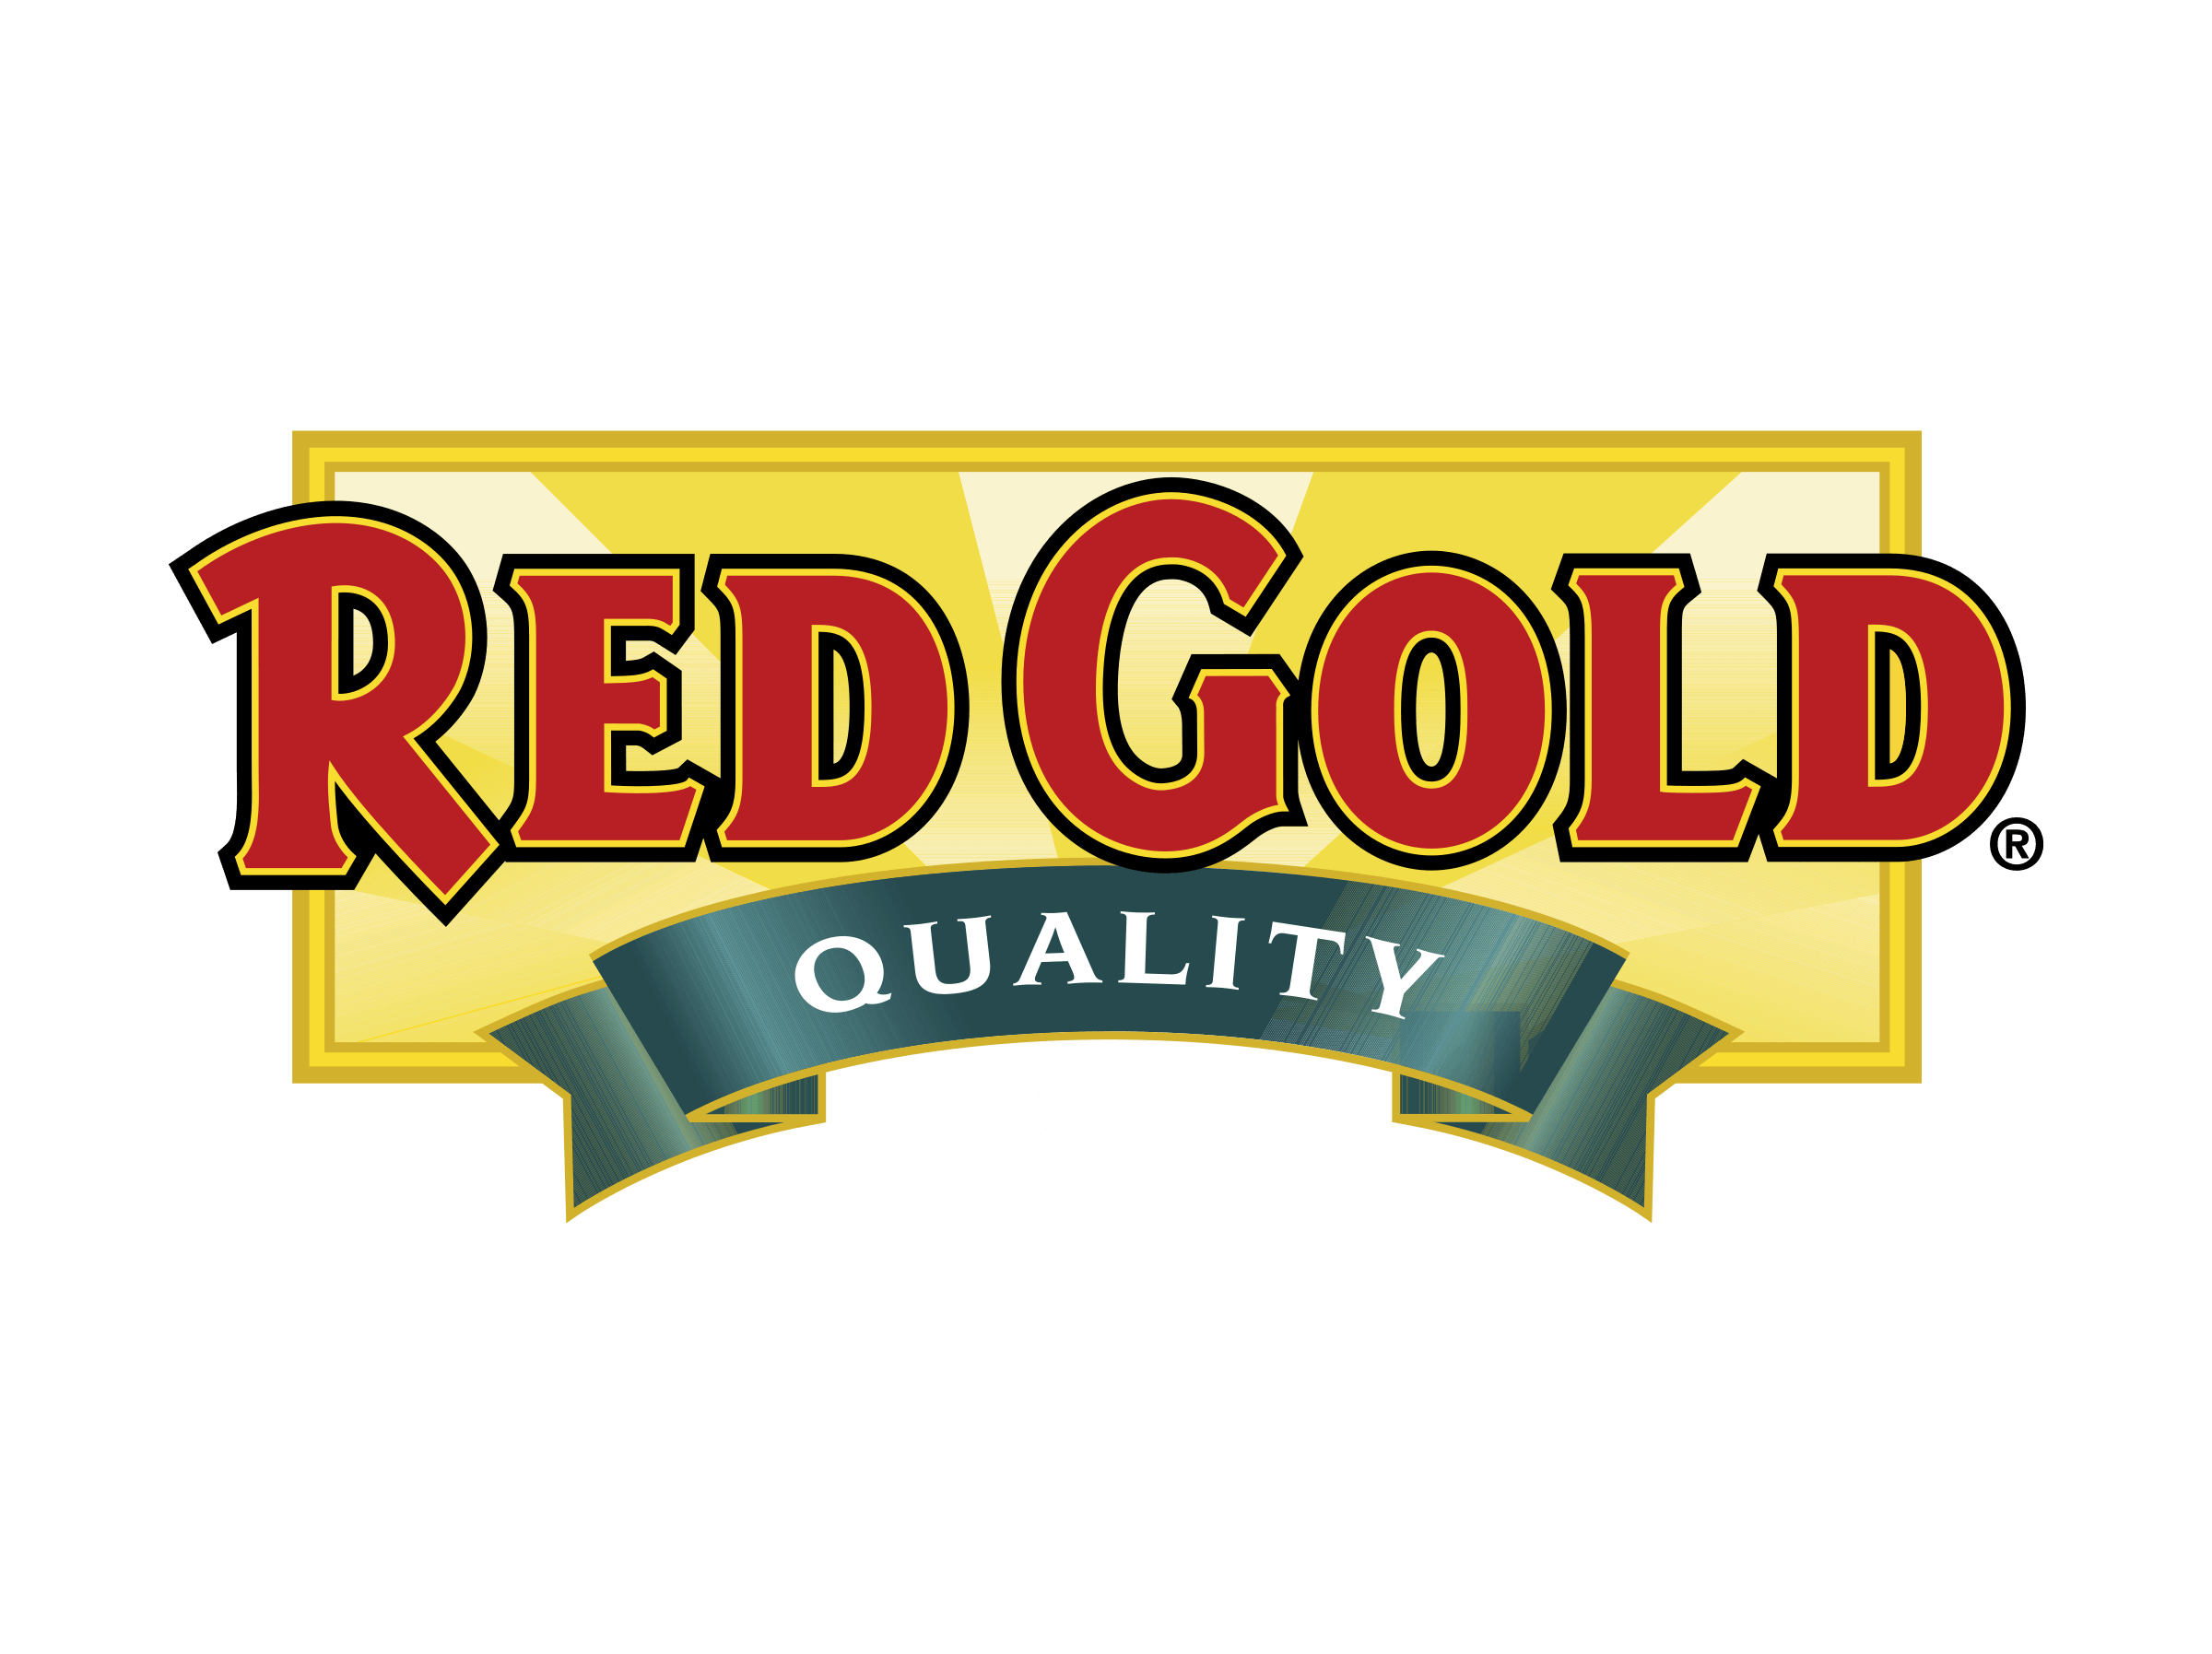 Quality Gold Logo - Red Gold Quality Logo PNG Transparent & SVG Vector